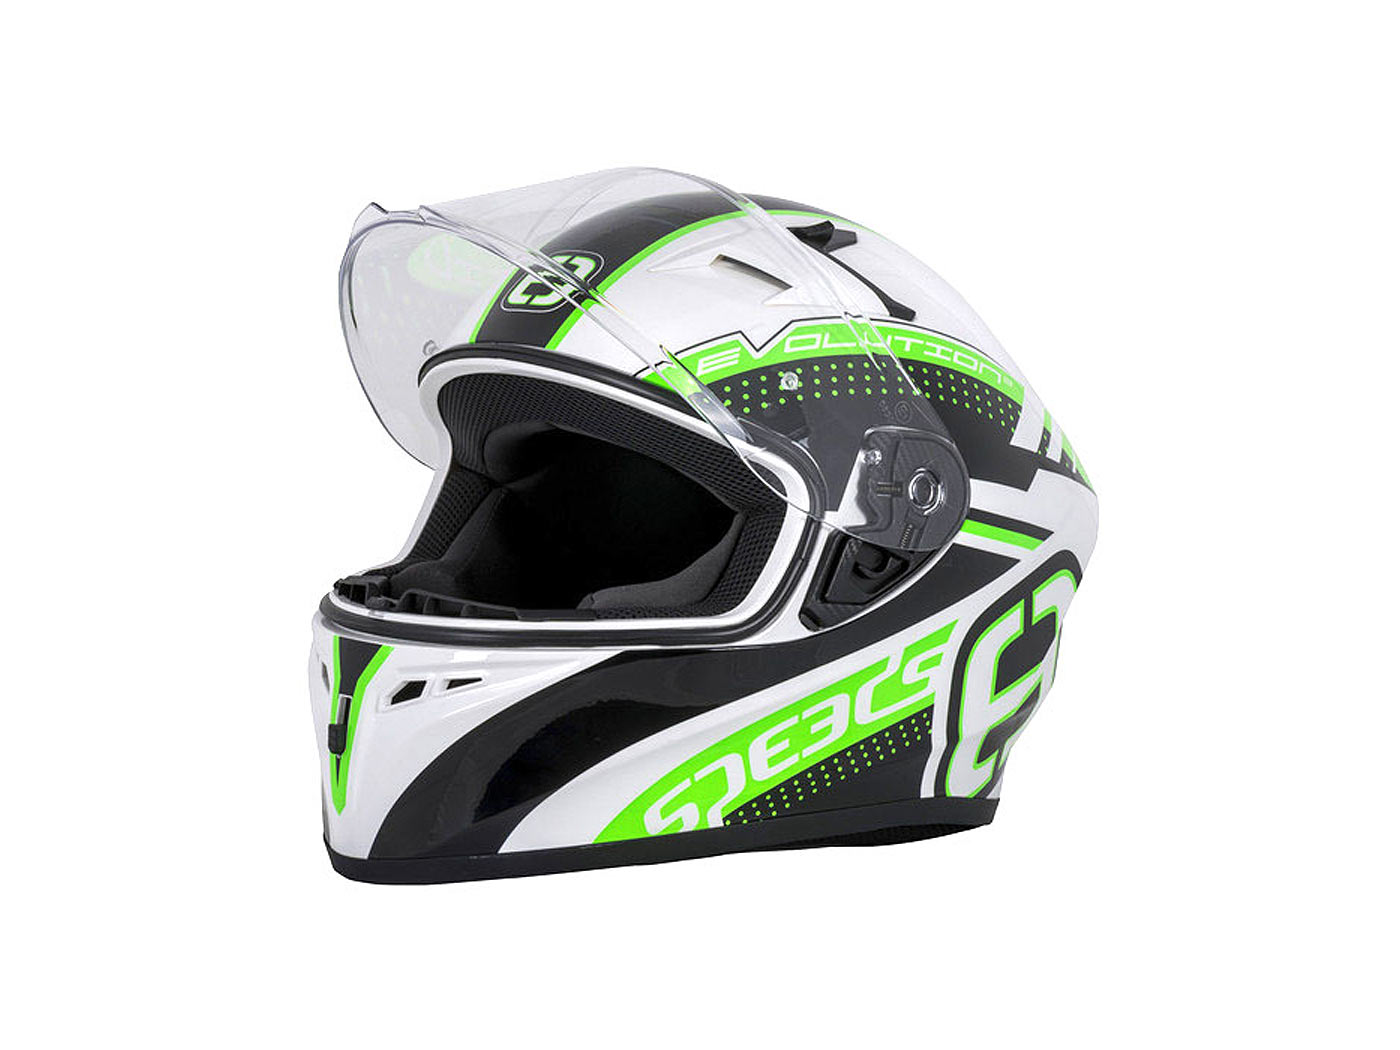 Helm Speeds Evo III XS weiß, schwarz, grün